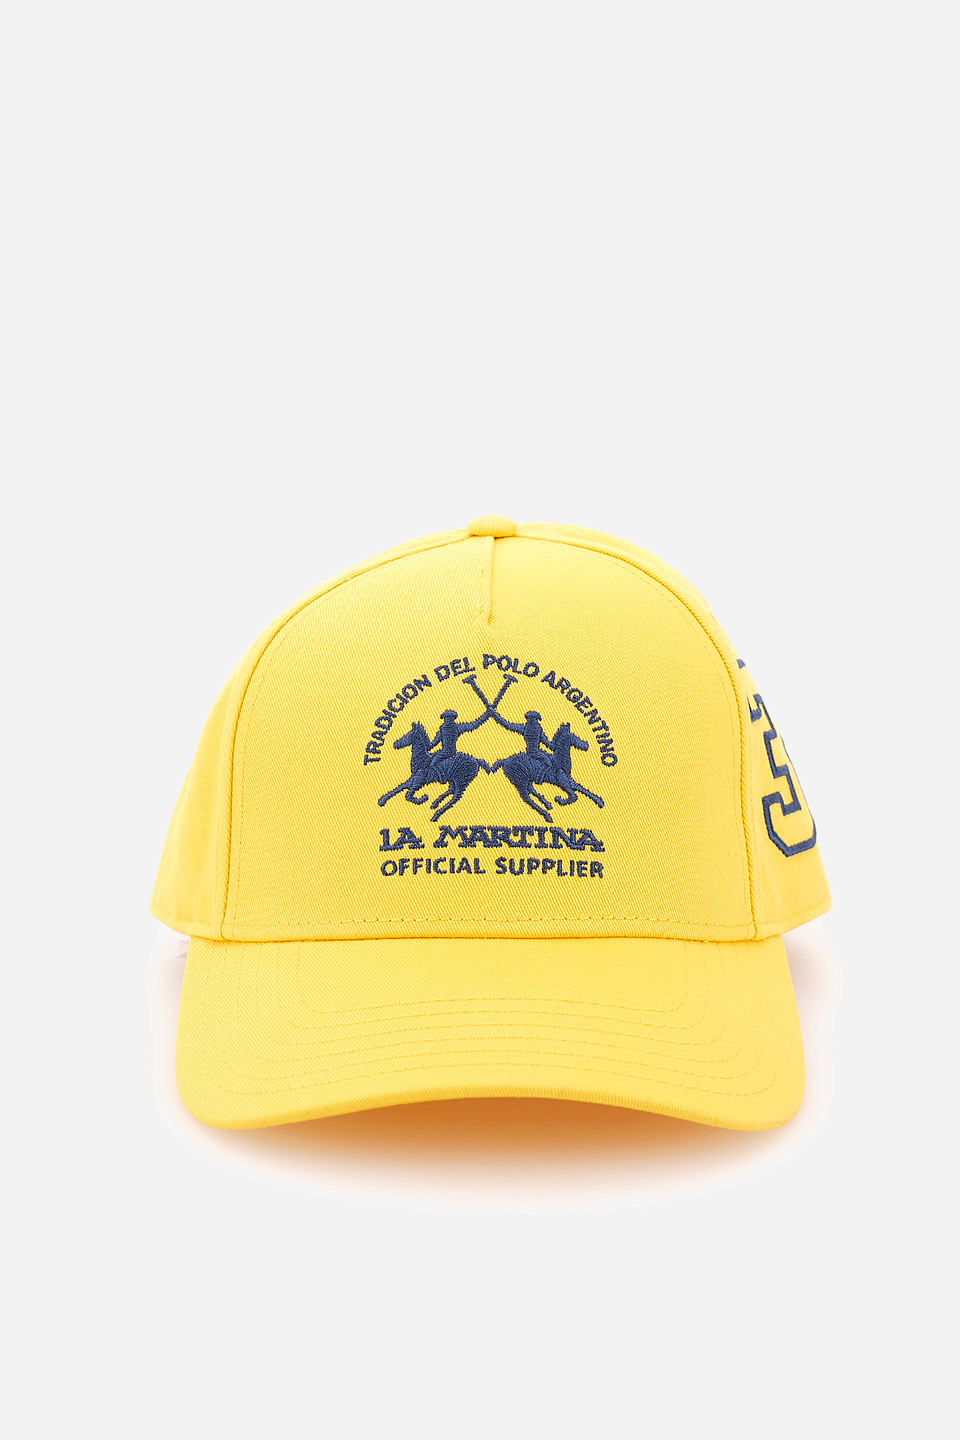 Cotton baseball hat -  Victer | La Martina - Official Online Shop